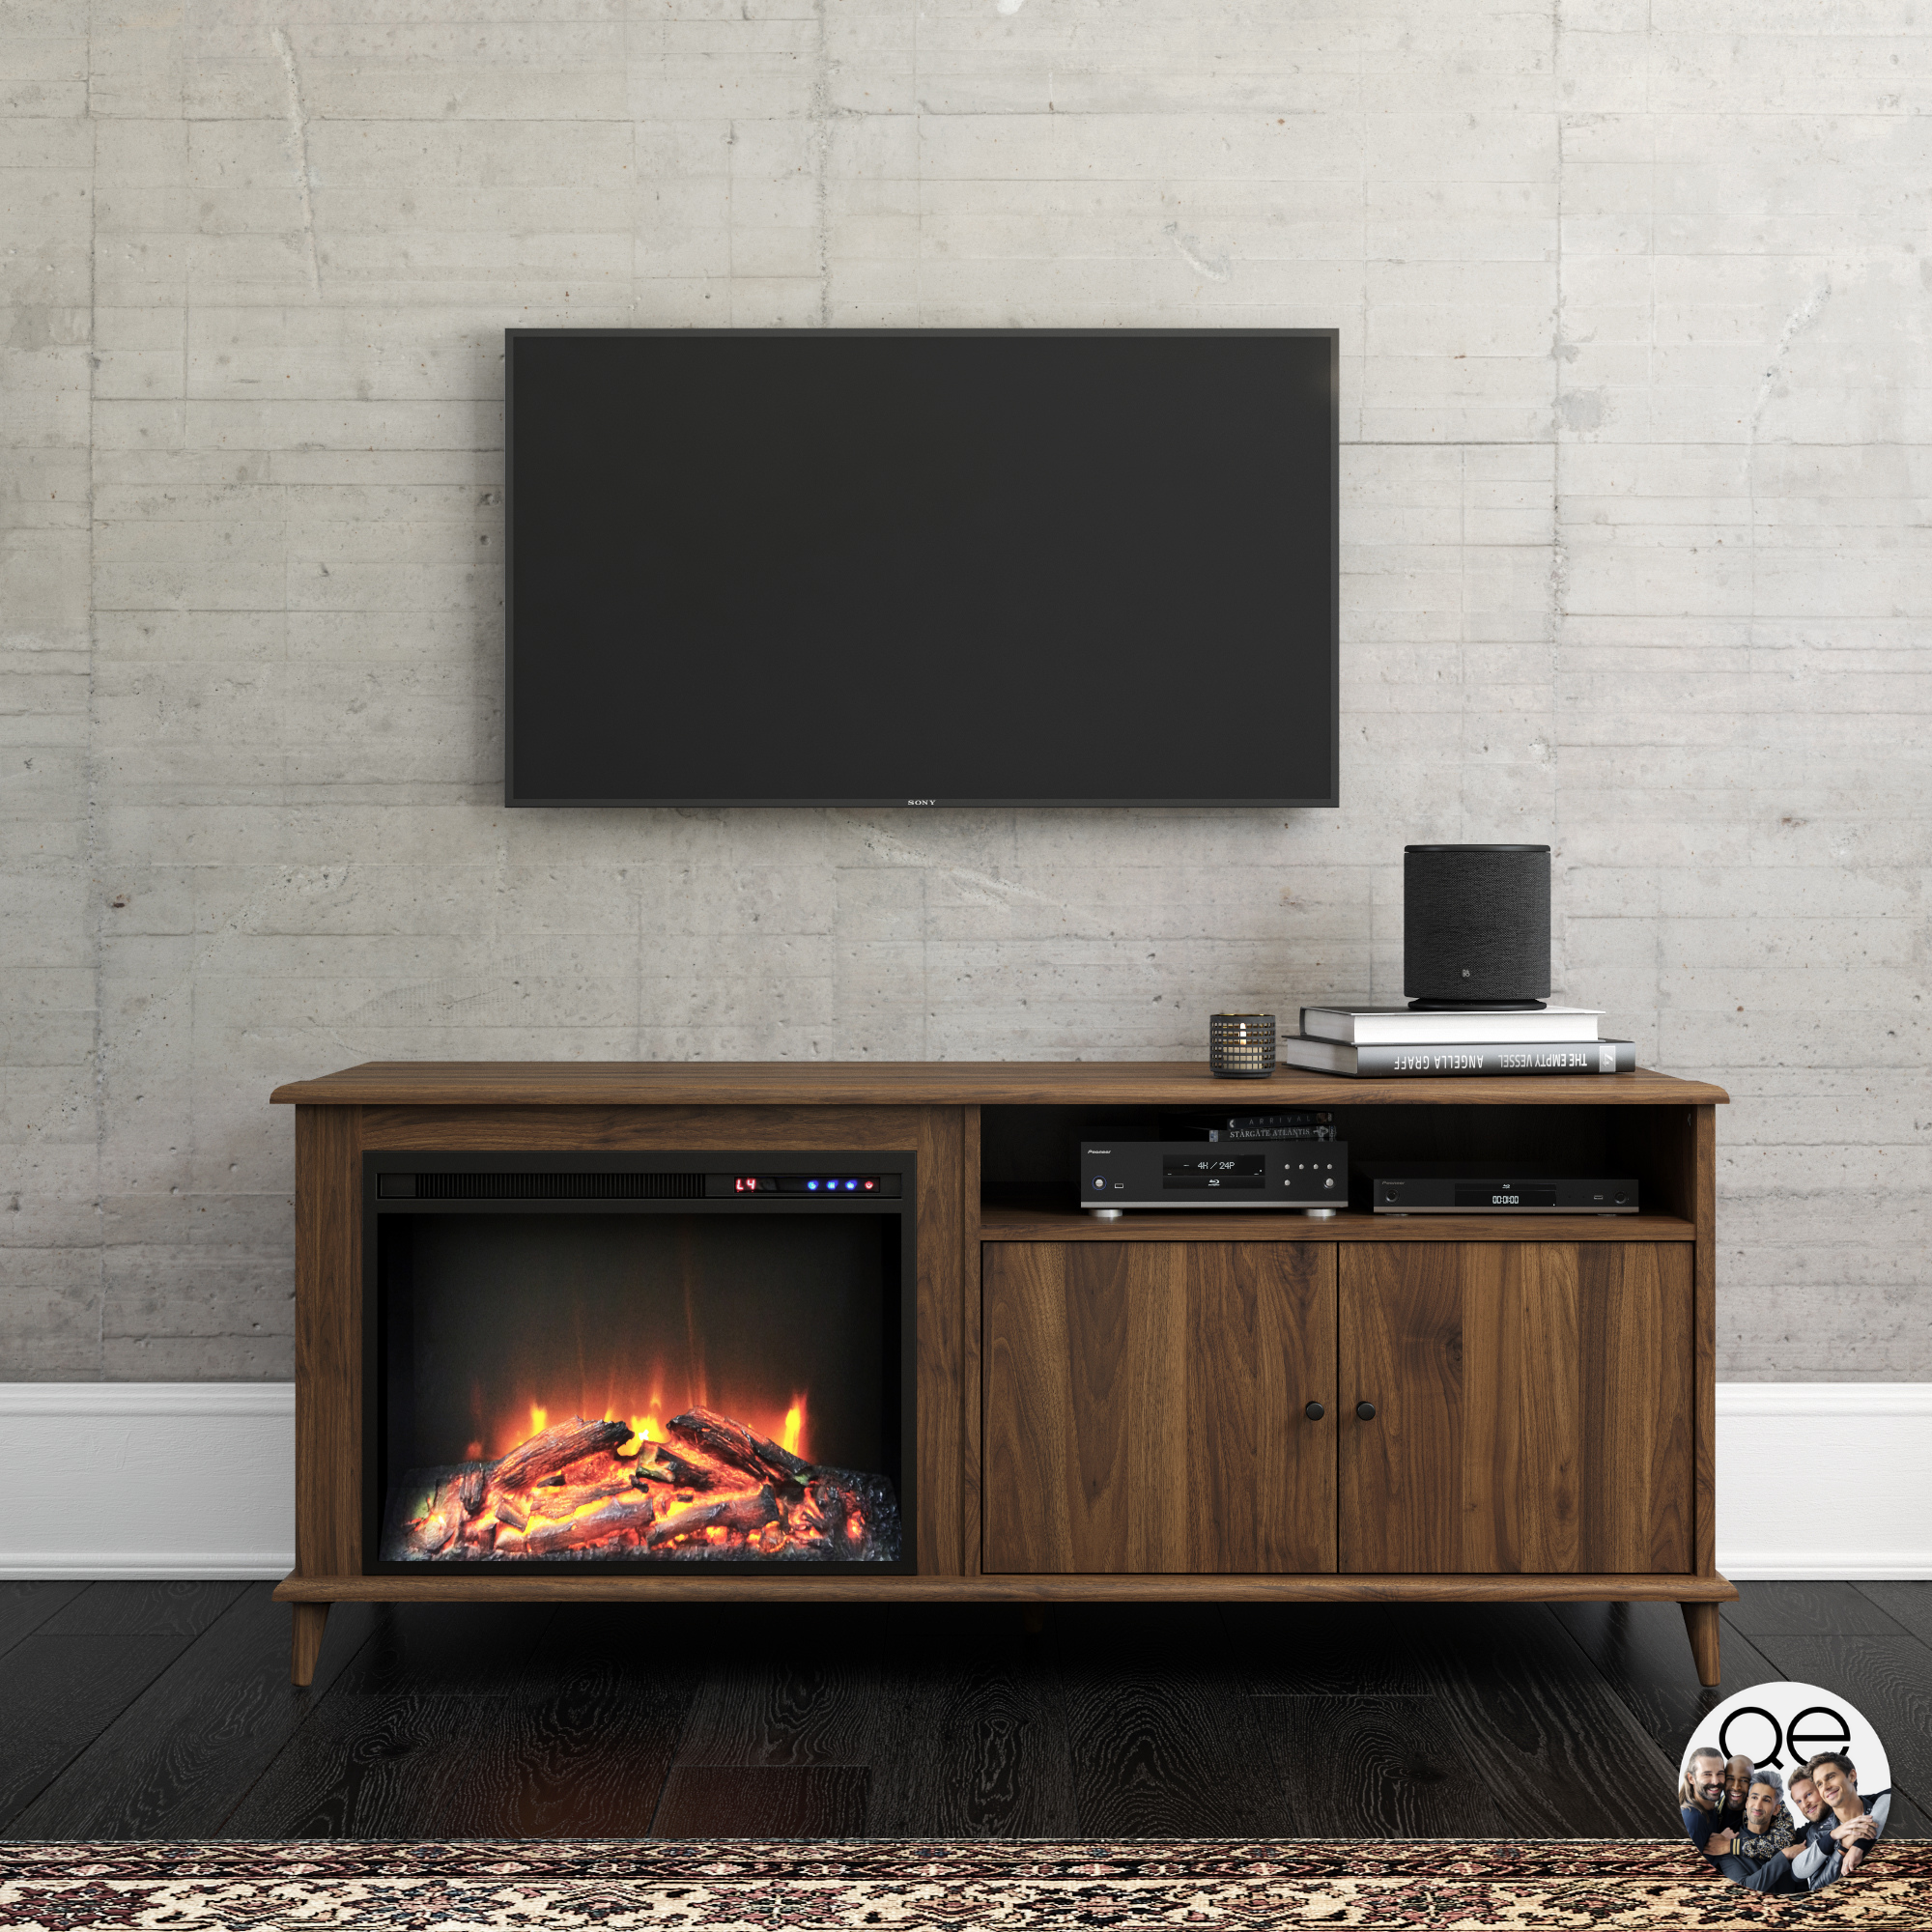 Amazing minimalist fireplace stand by the fireplace